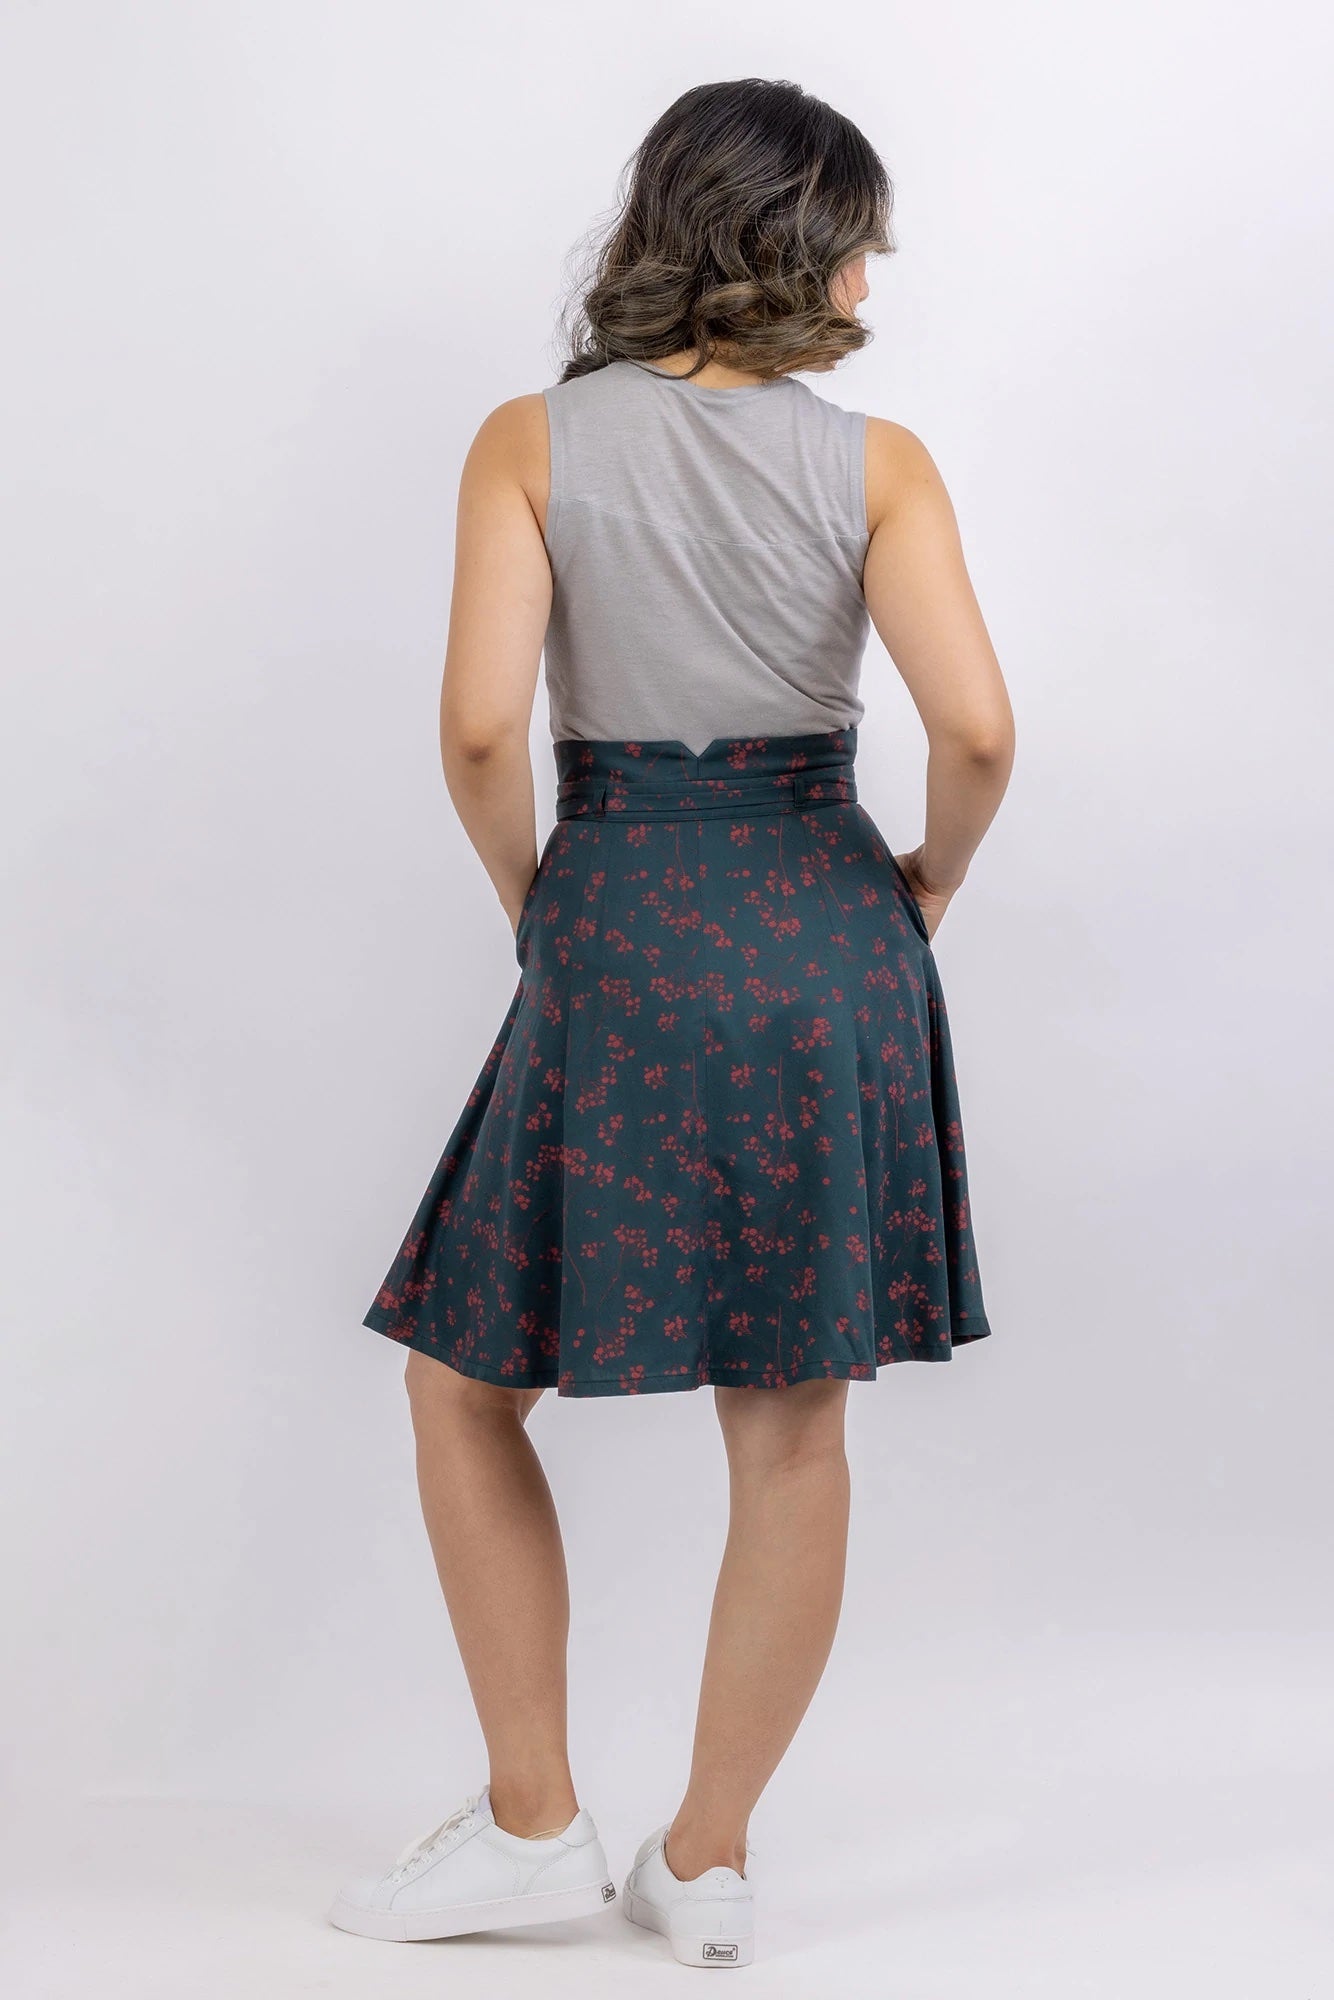 Forget-me-not Patterns Natalie Skirt